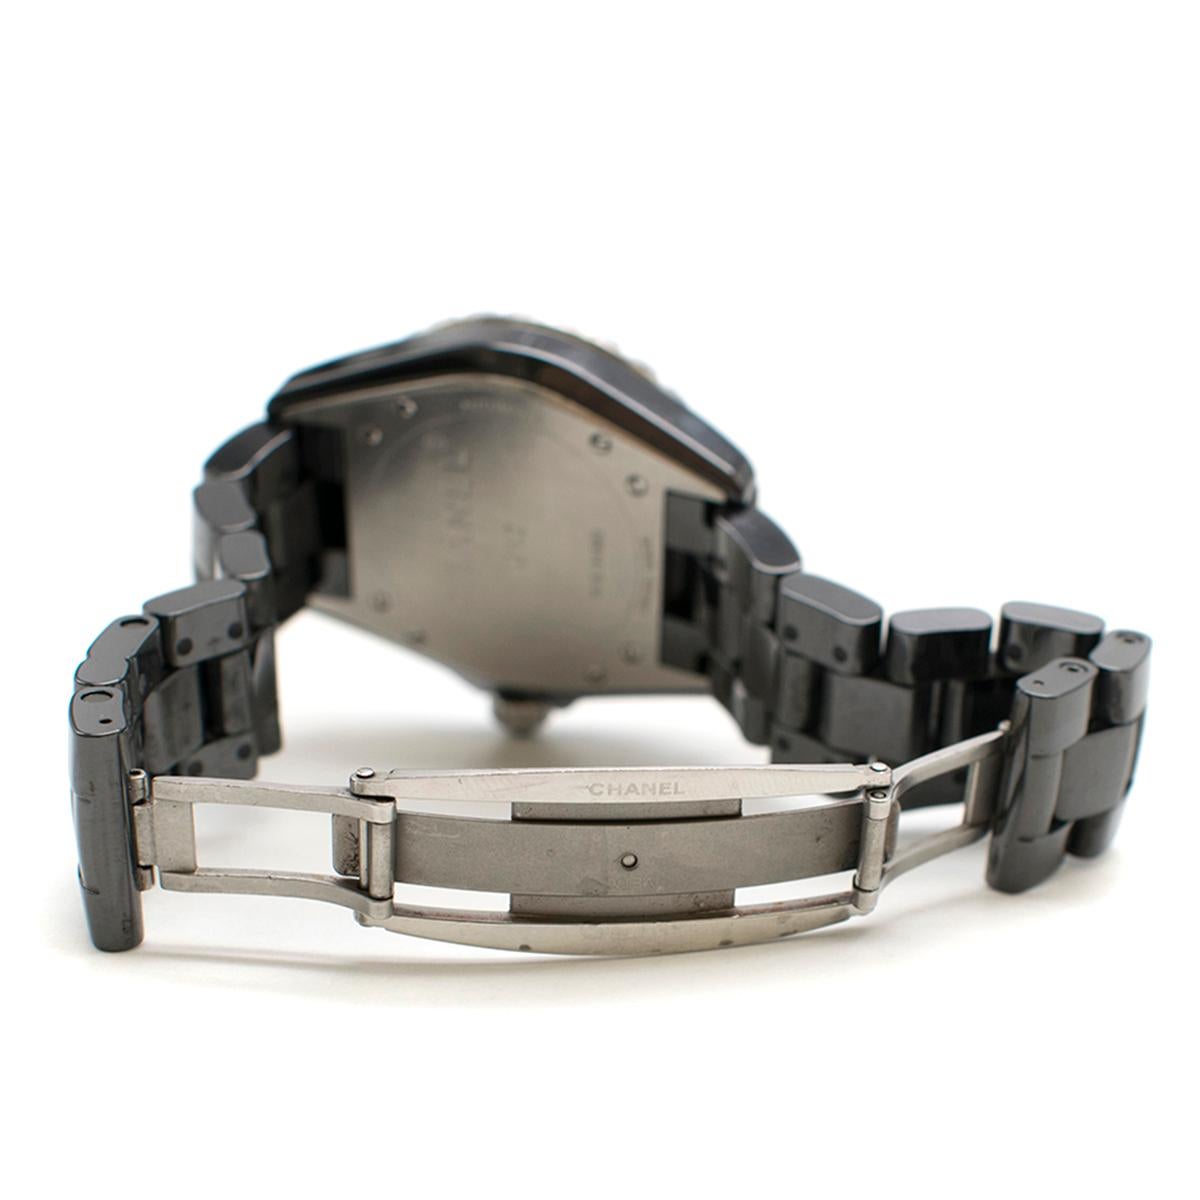 Women's Chanel Black & Silver J12 200 m water resistance Automatic Watch 